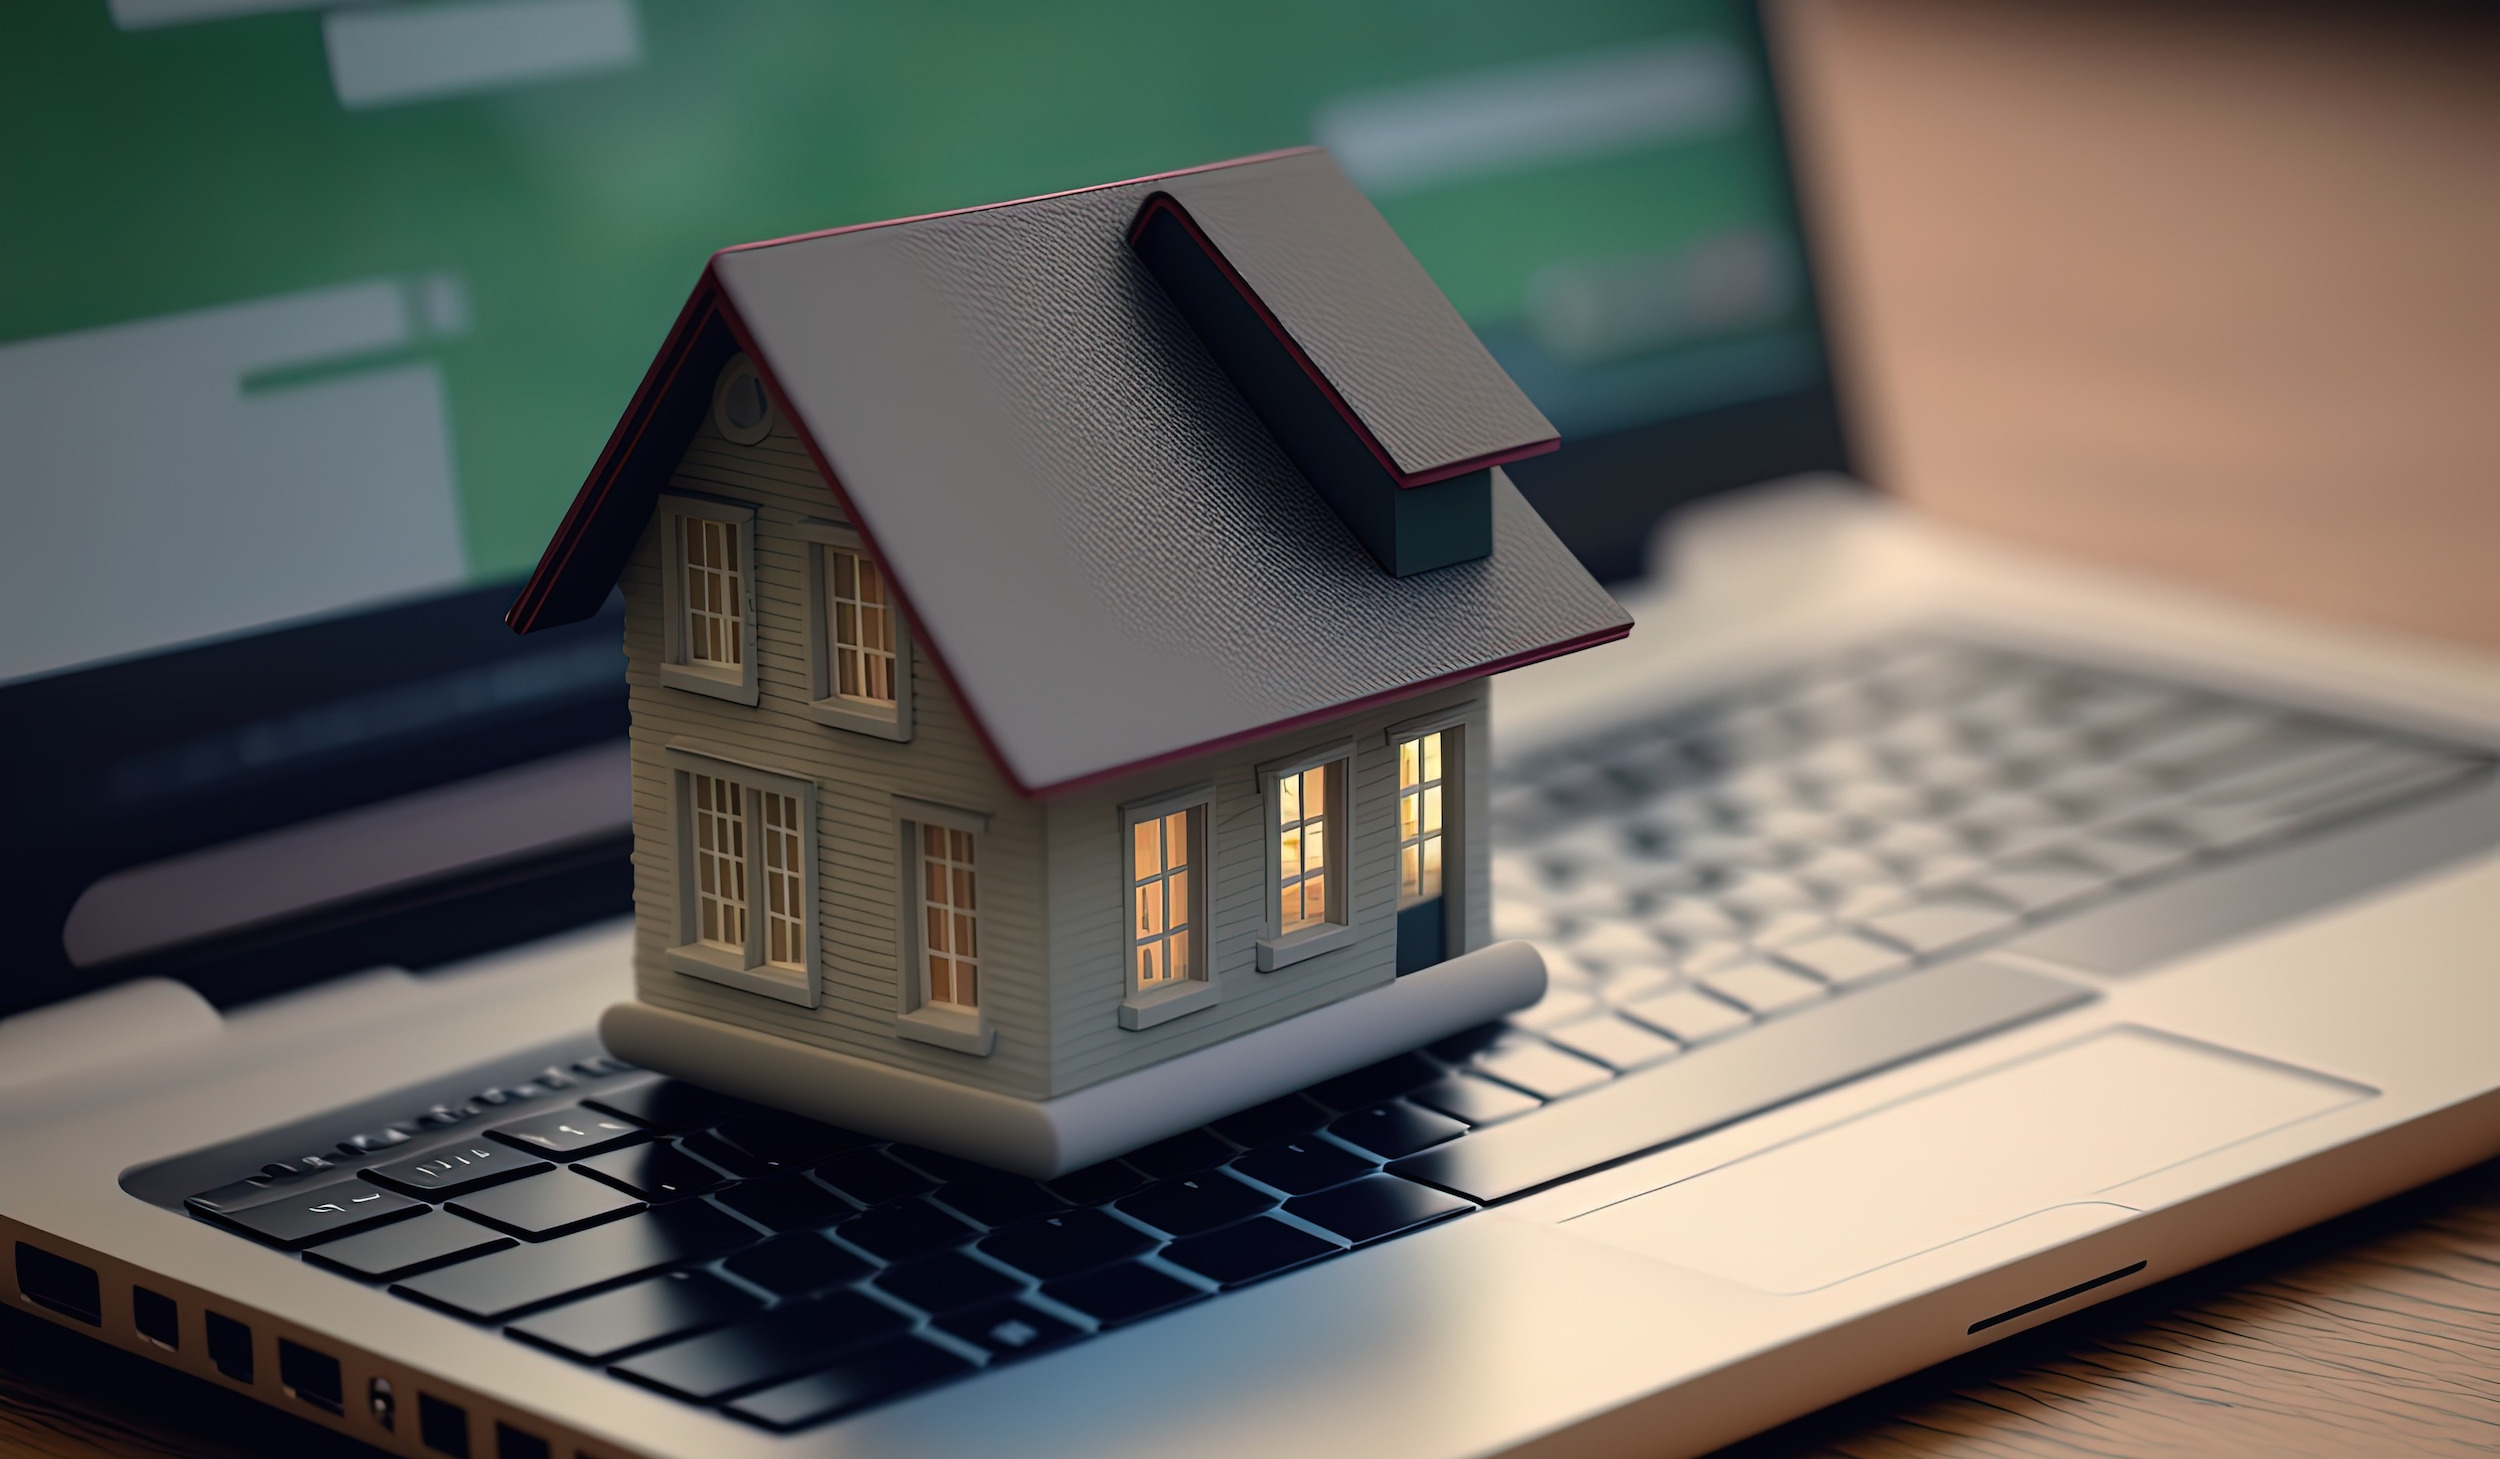 A house miniature on a laptop keyboard